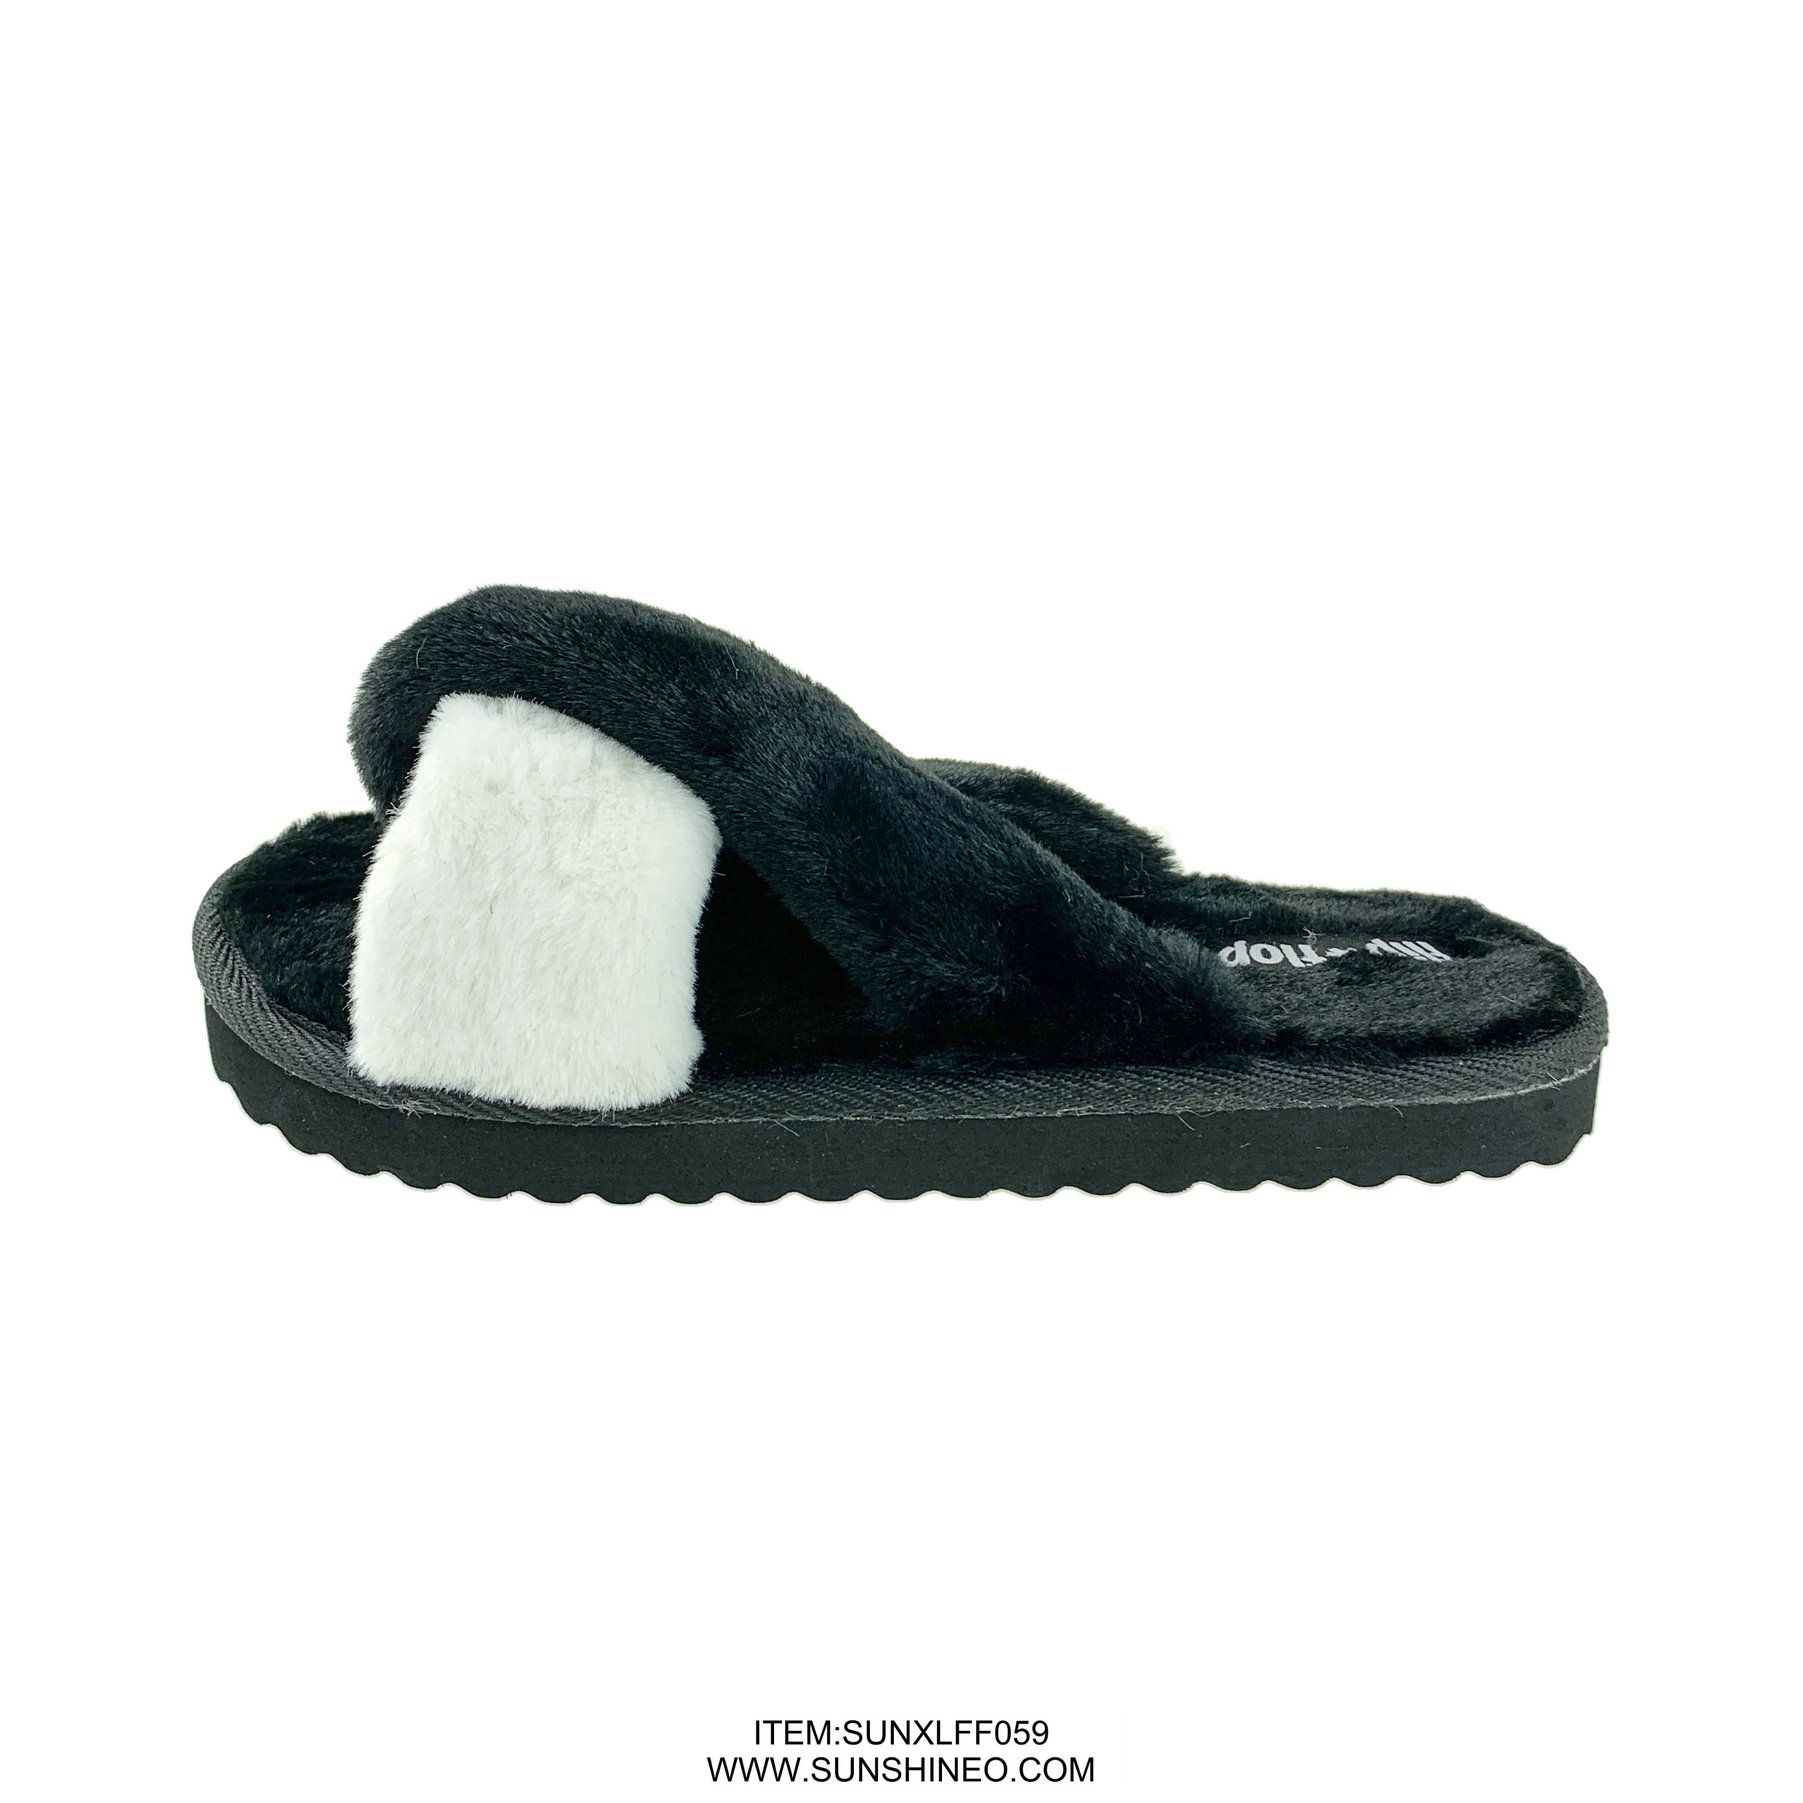 SUNXLFF059 fur flip flop sandals winter slippers